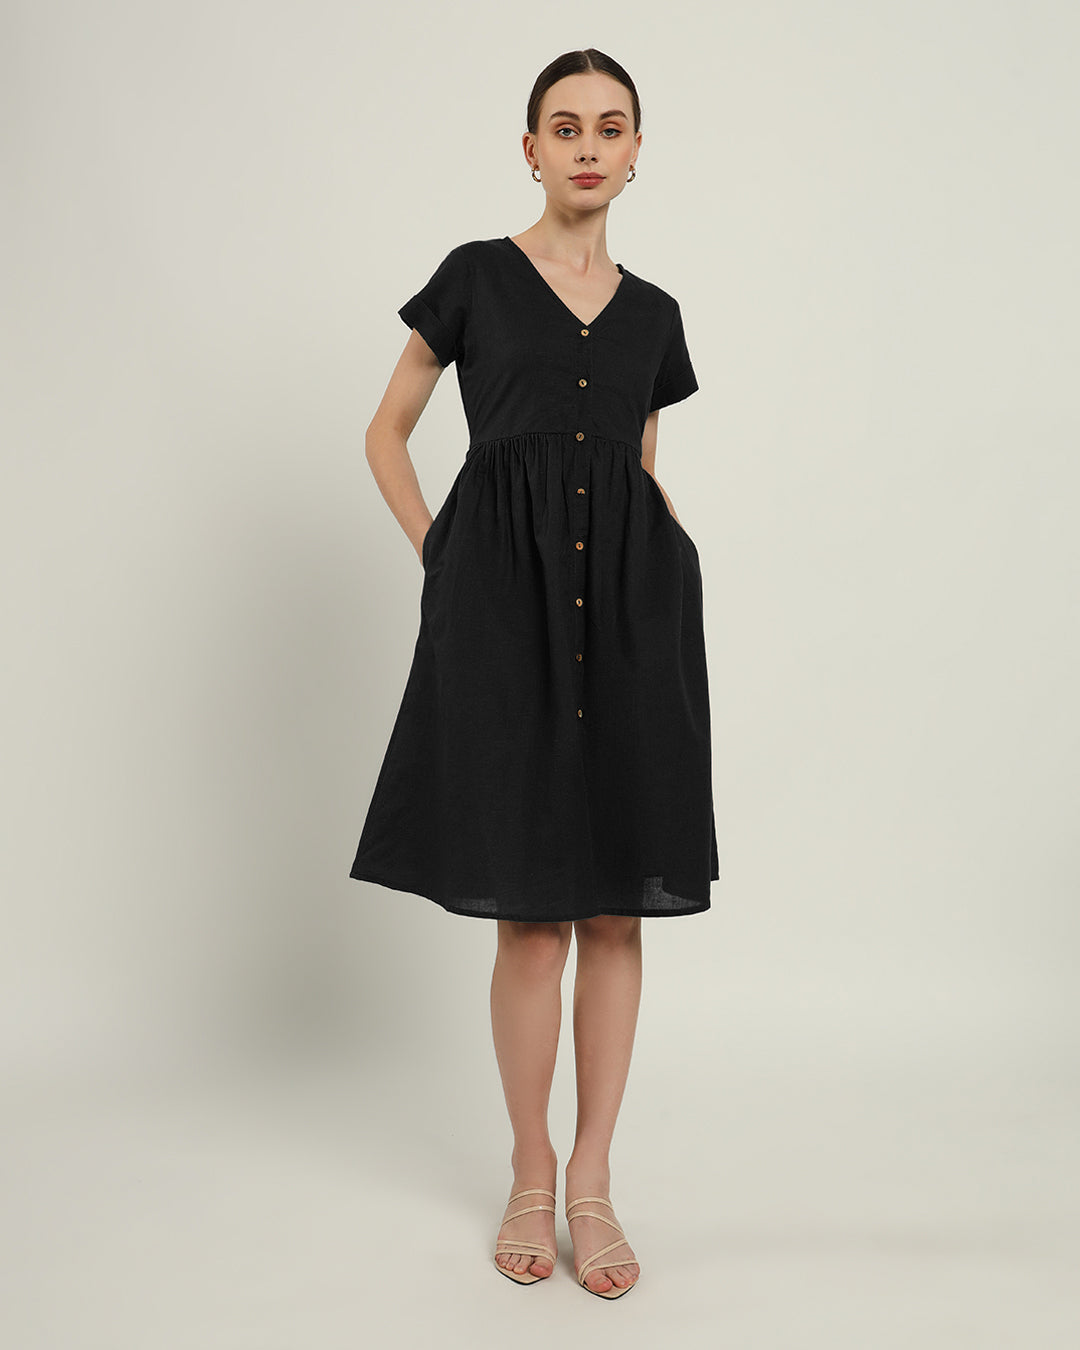 The Valence Noir Cotton Dress